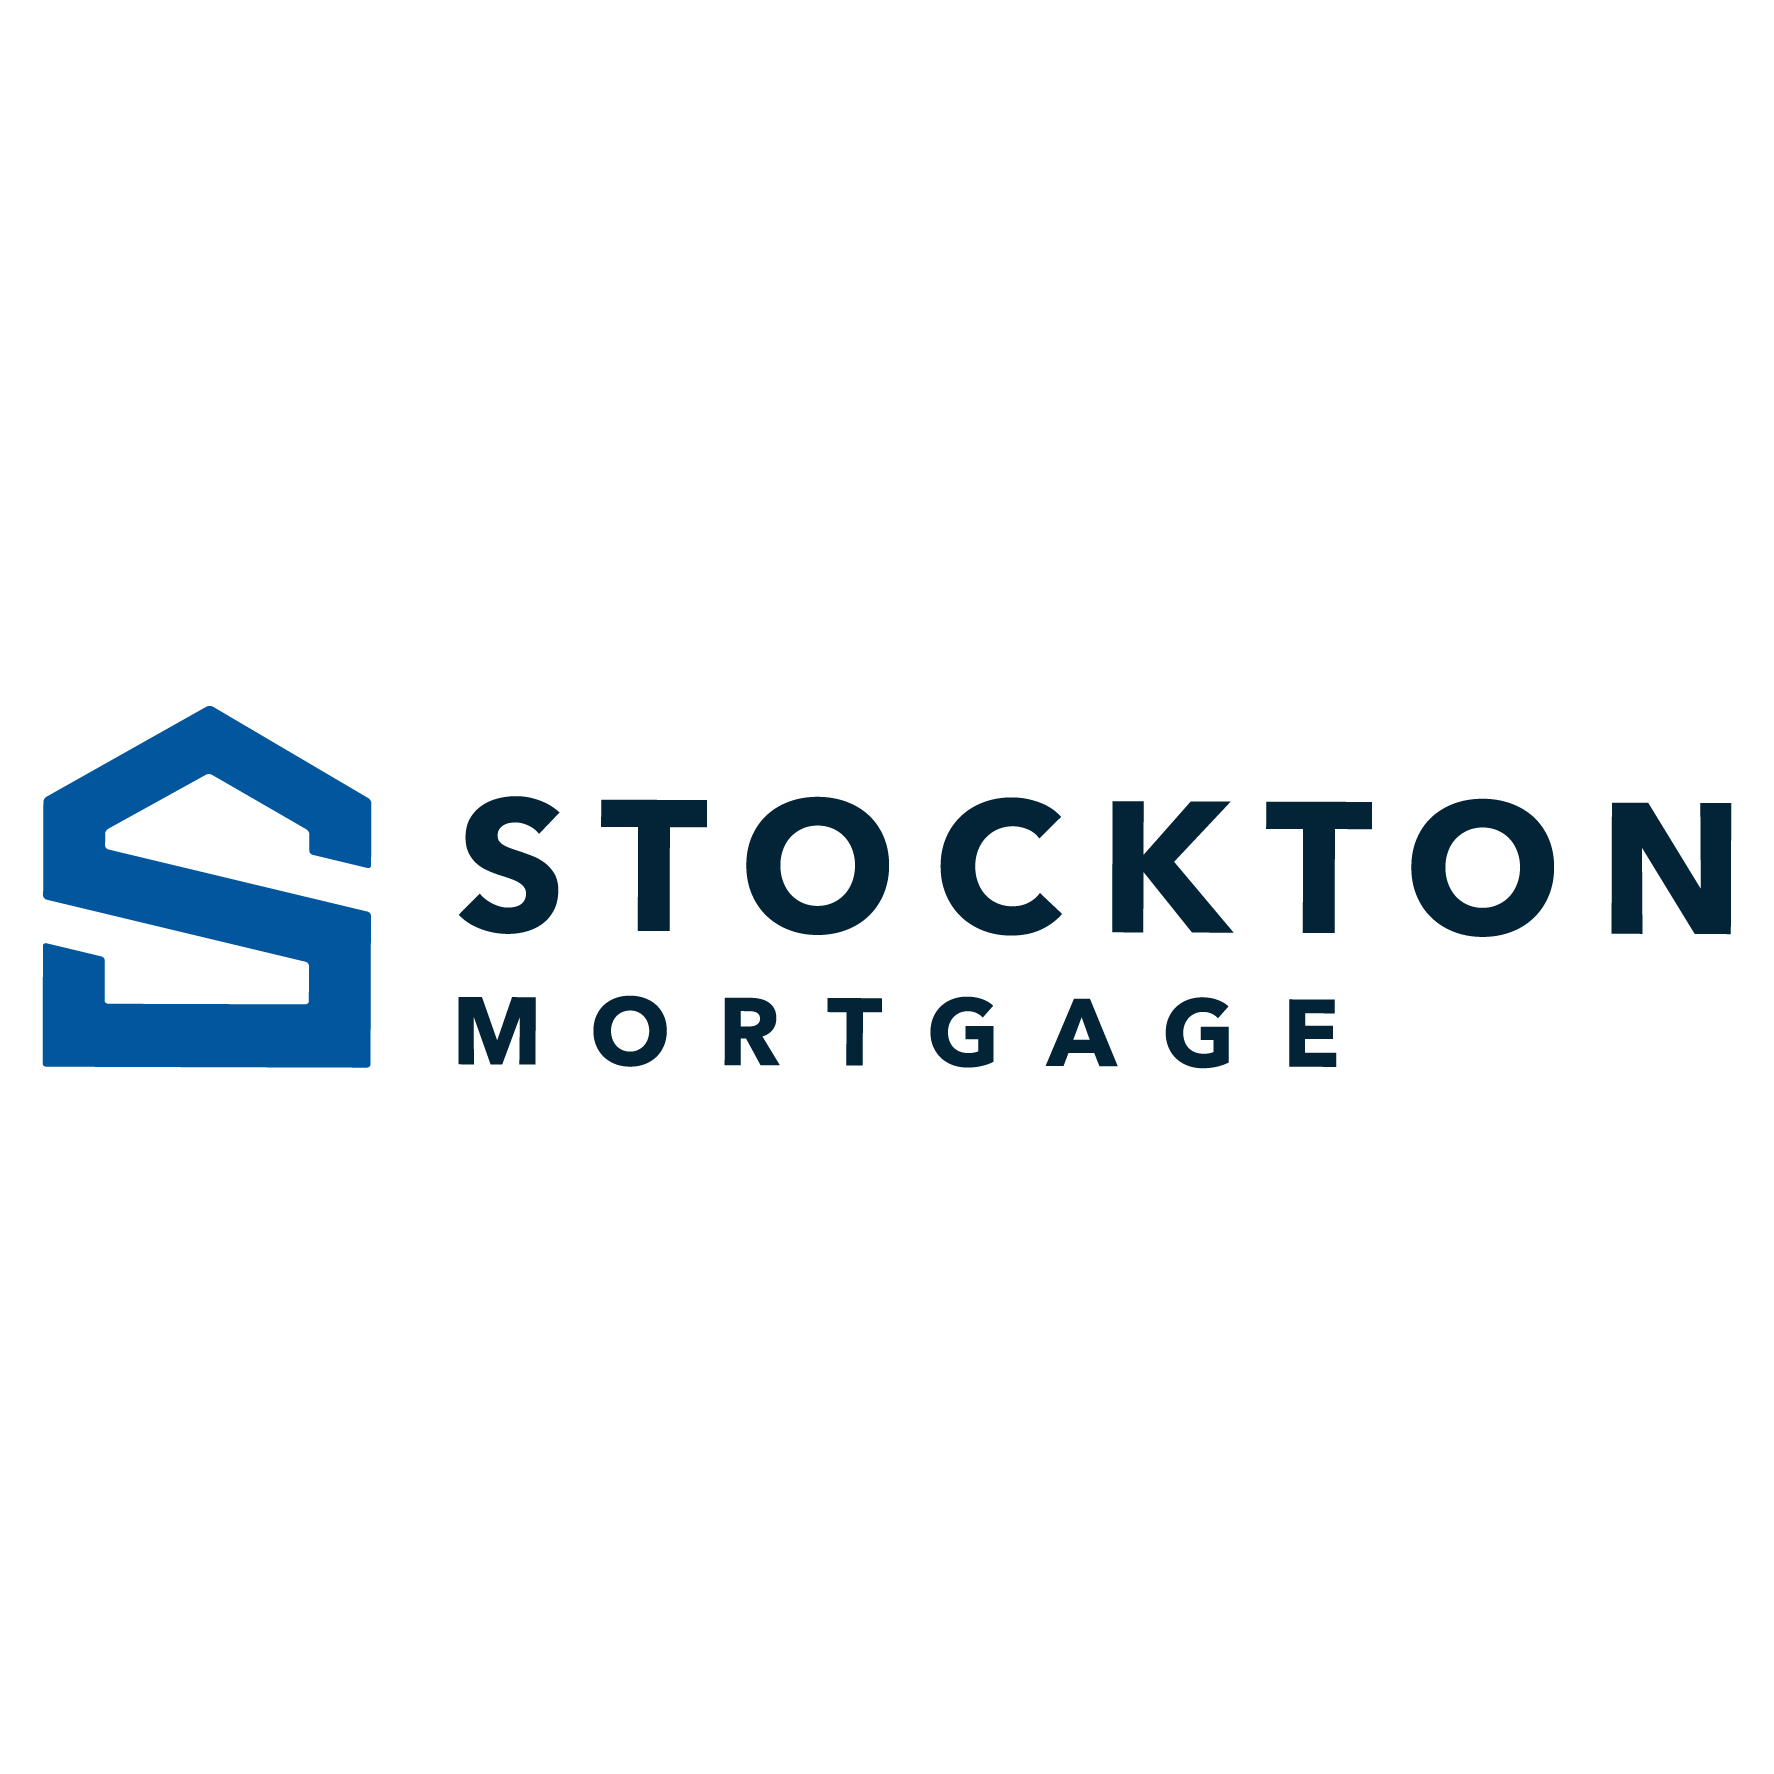 Stockton Mortgage Photo